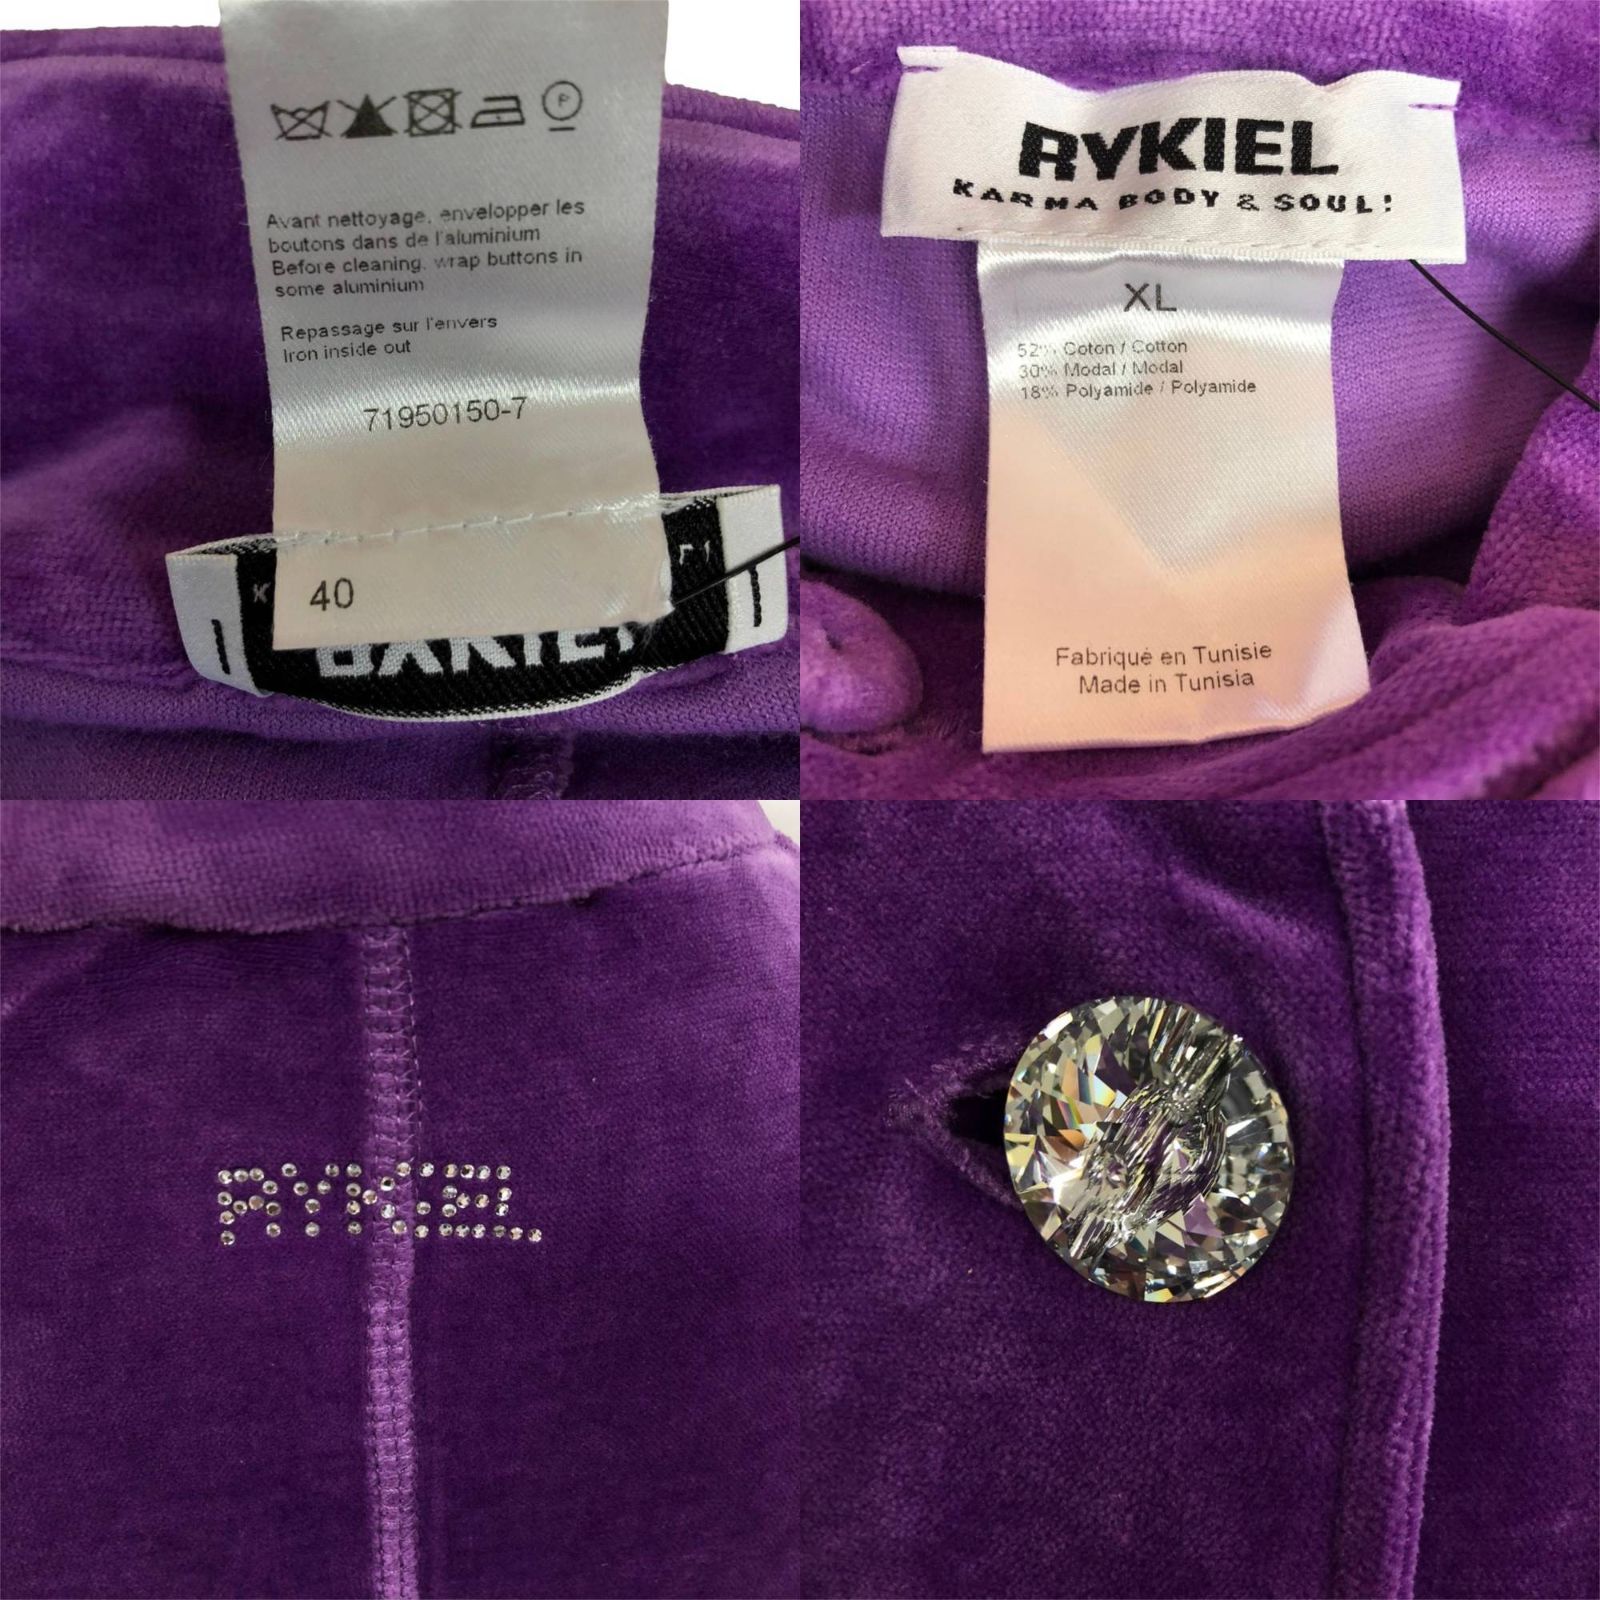 SONIA RYKIEL ネールジャケット XL サイズ - すぺ - メルカリ